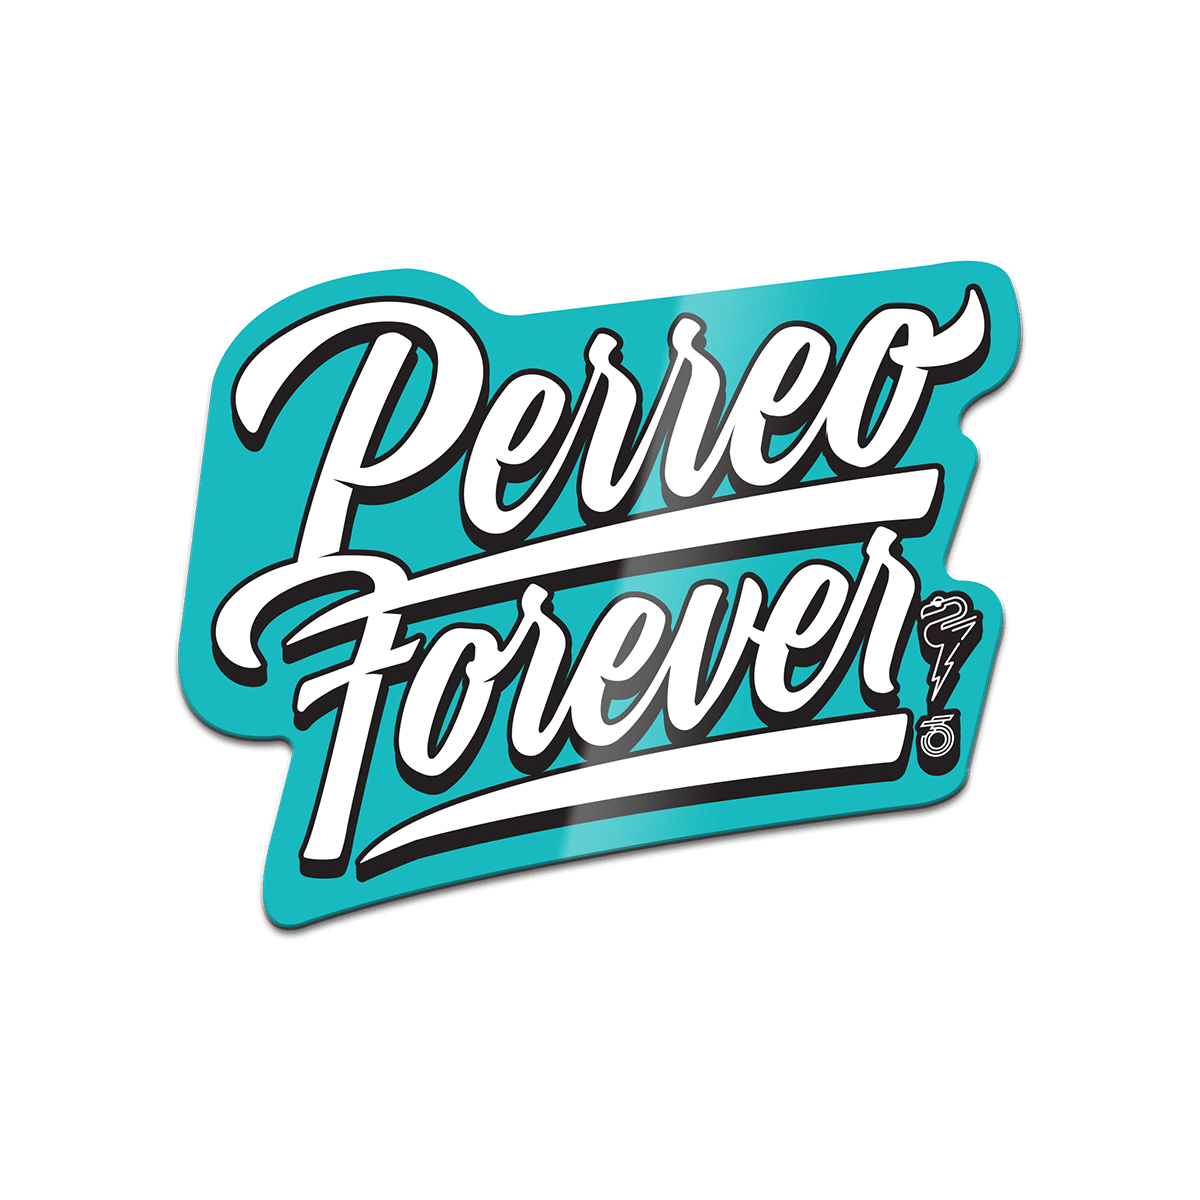 PERREO FOREVER - STICKER